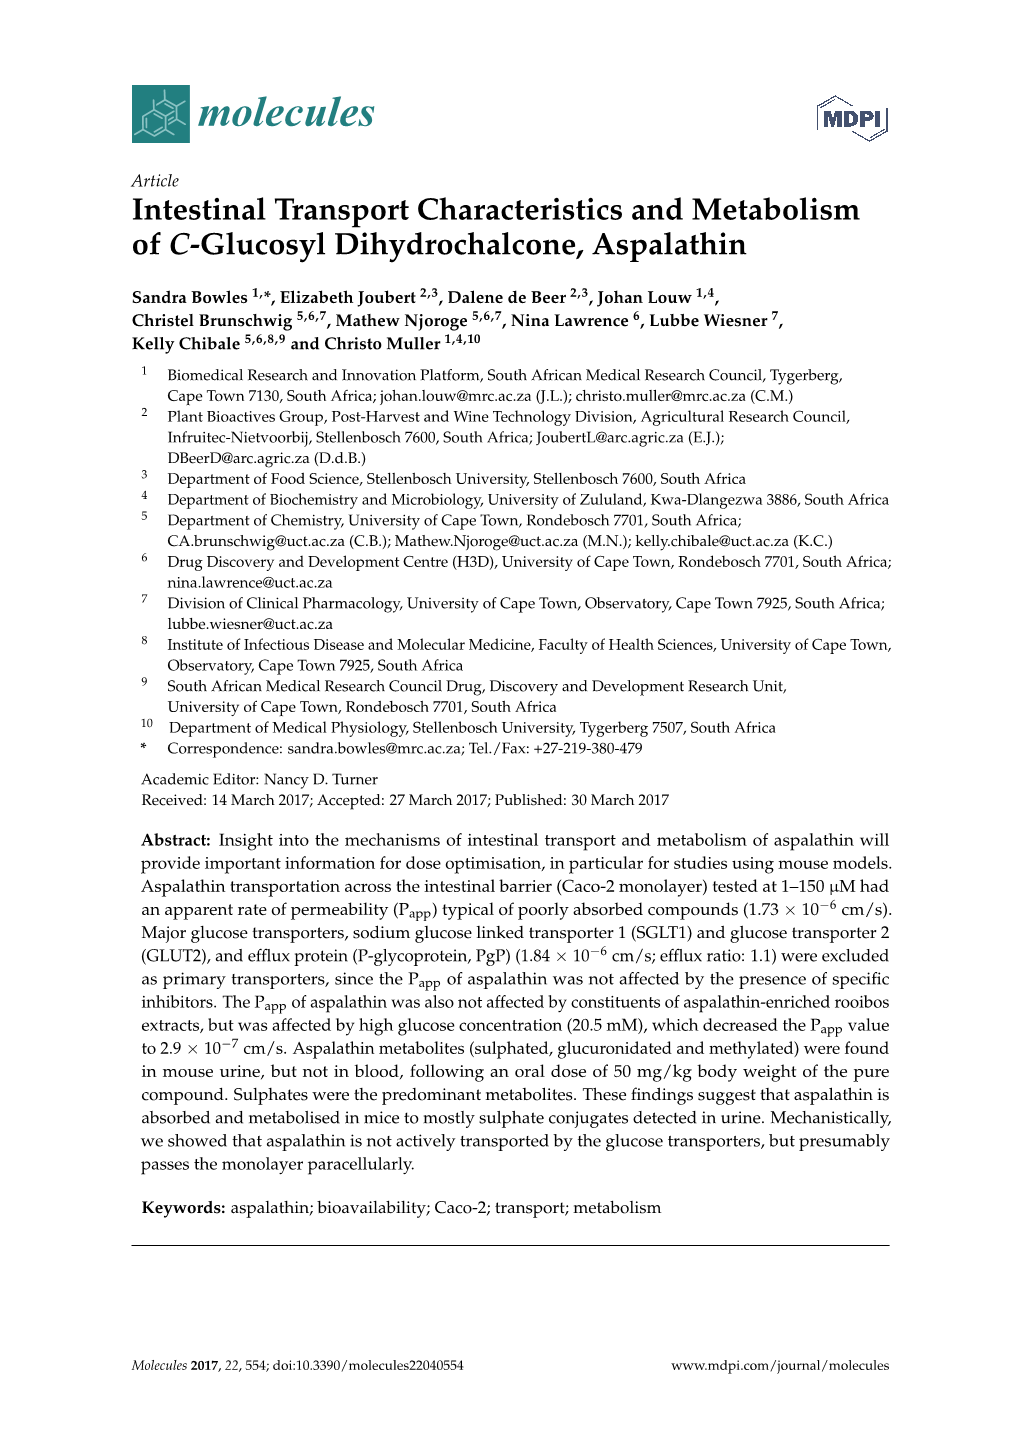 Intestinal Transport Characteristics and Metabolism of C-Glucosyl Dihydrochalcone, Aspalathin